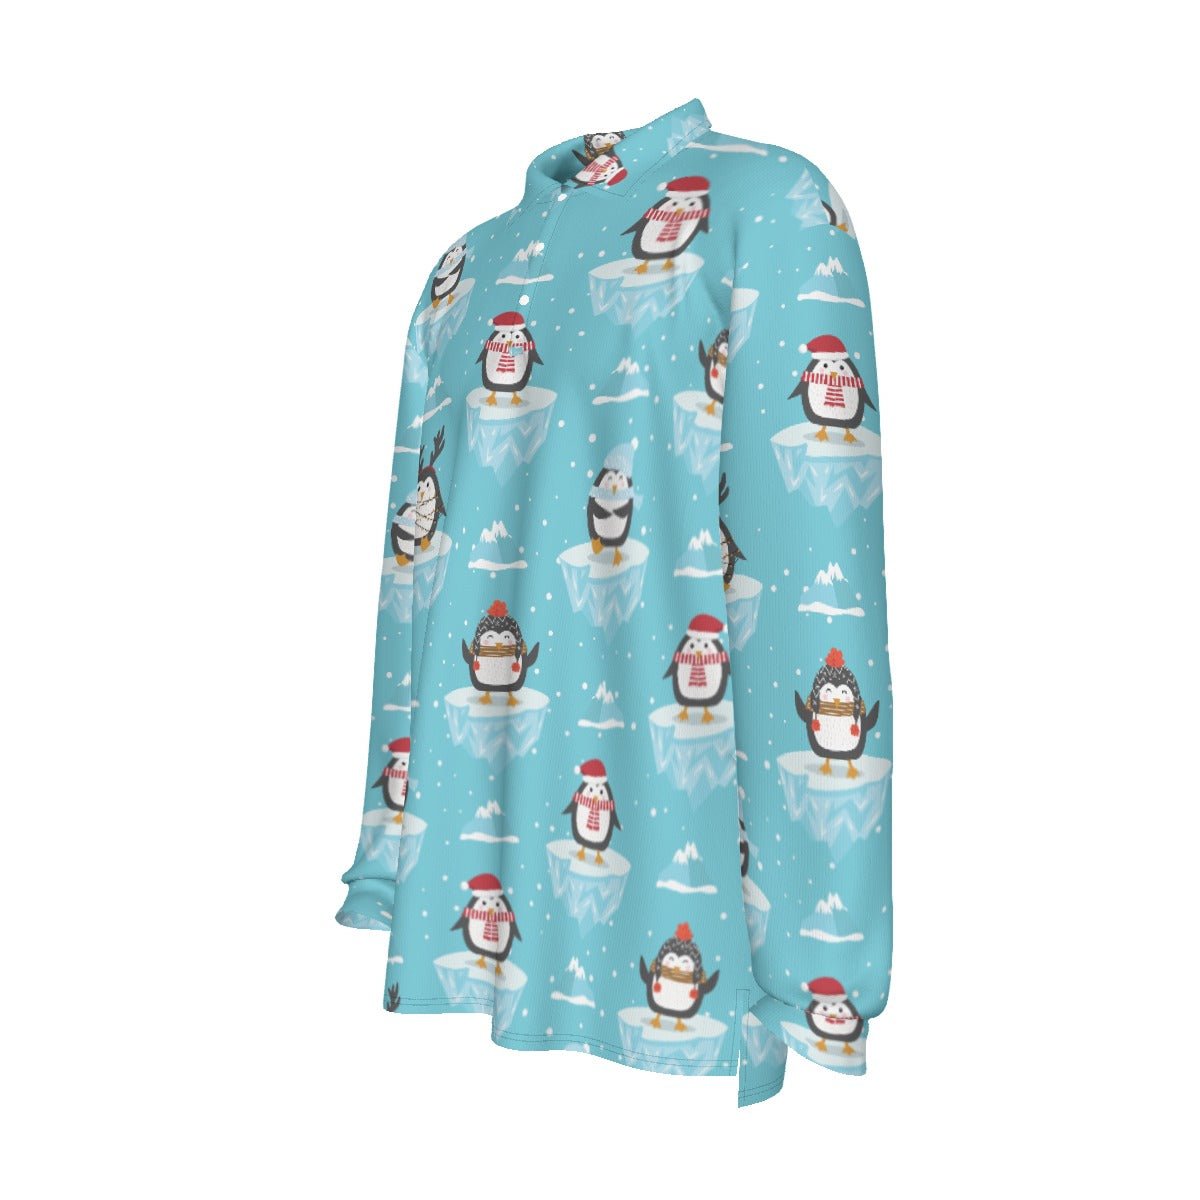 Men's Long Sleeve Christmas Polo Shirt - Icy Penguins - Festive Style